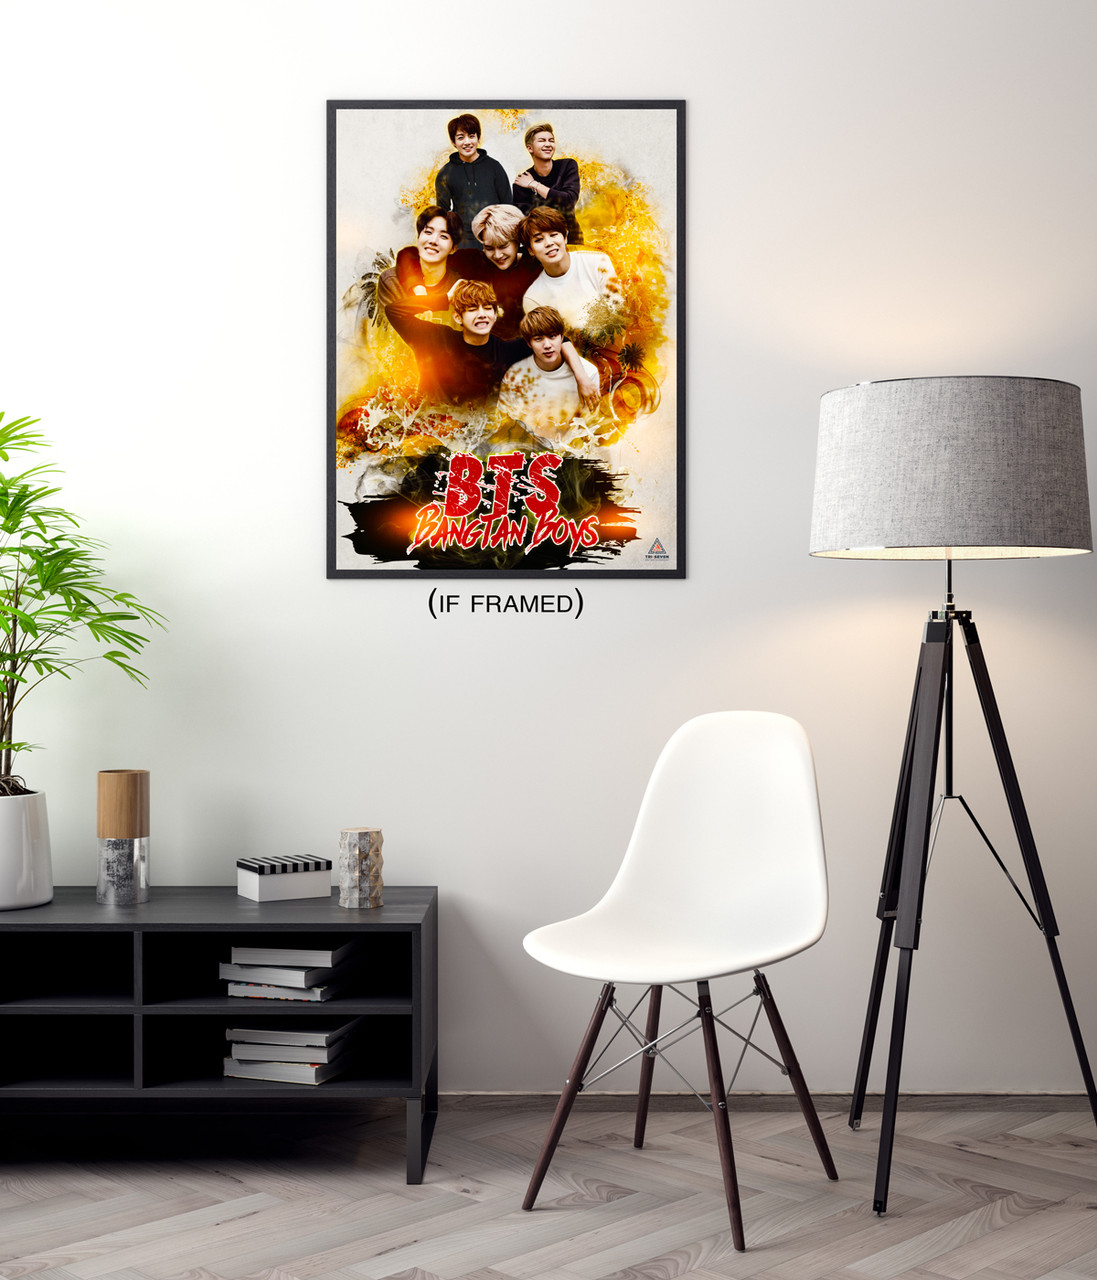 Bangtan Limited Poster Artwork - Professional Wall Art Merchandise (8x10)